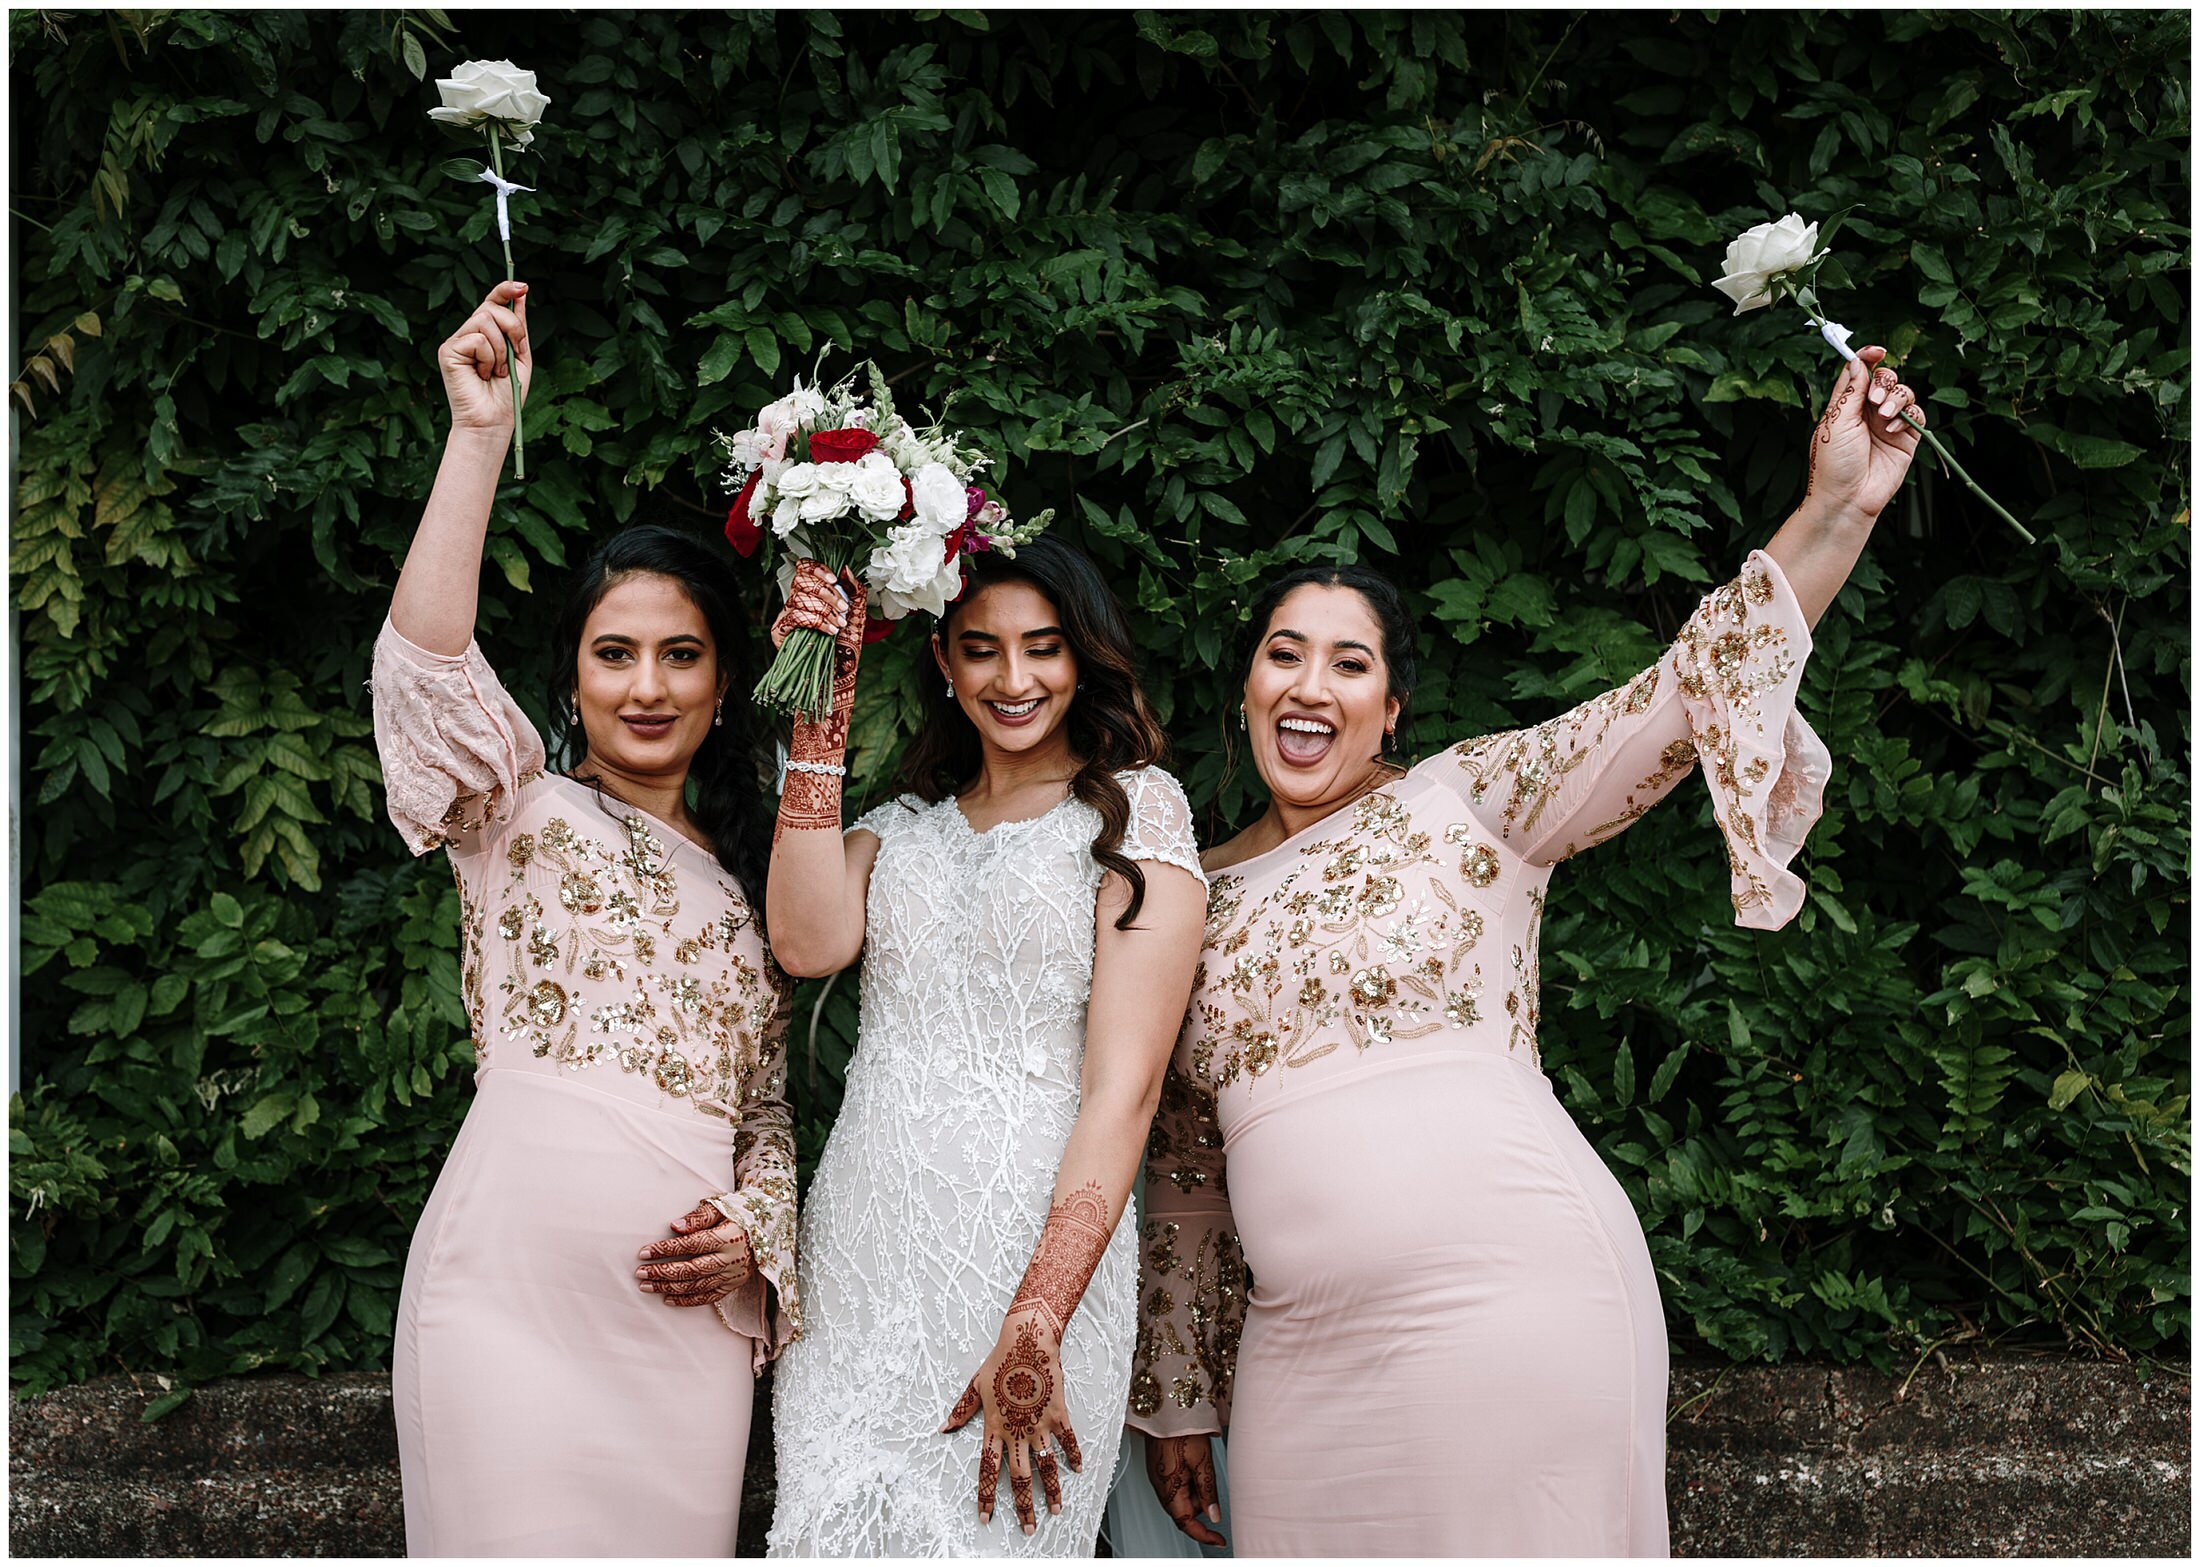 Cordis Auckland Hotel Wedding Venue | Auckland Wedding Photographer | Auckland Videographer | Muslim Ceremony | Cordis Wedding | Michael Savage Memorial Park Wedding Photography | Auckland Venue